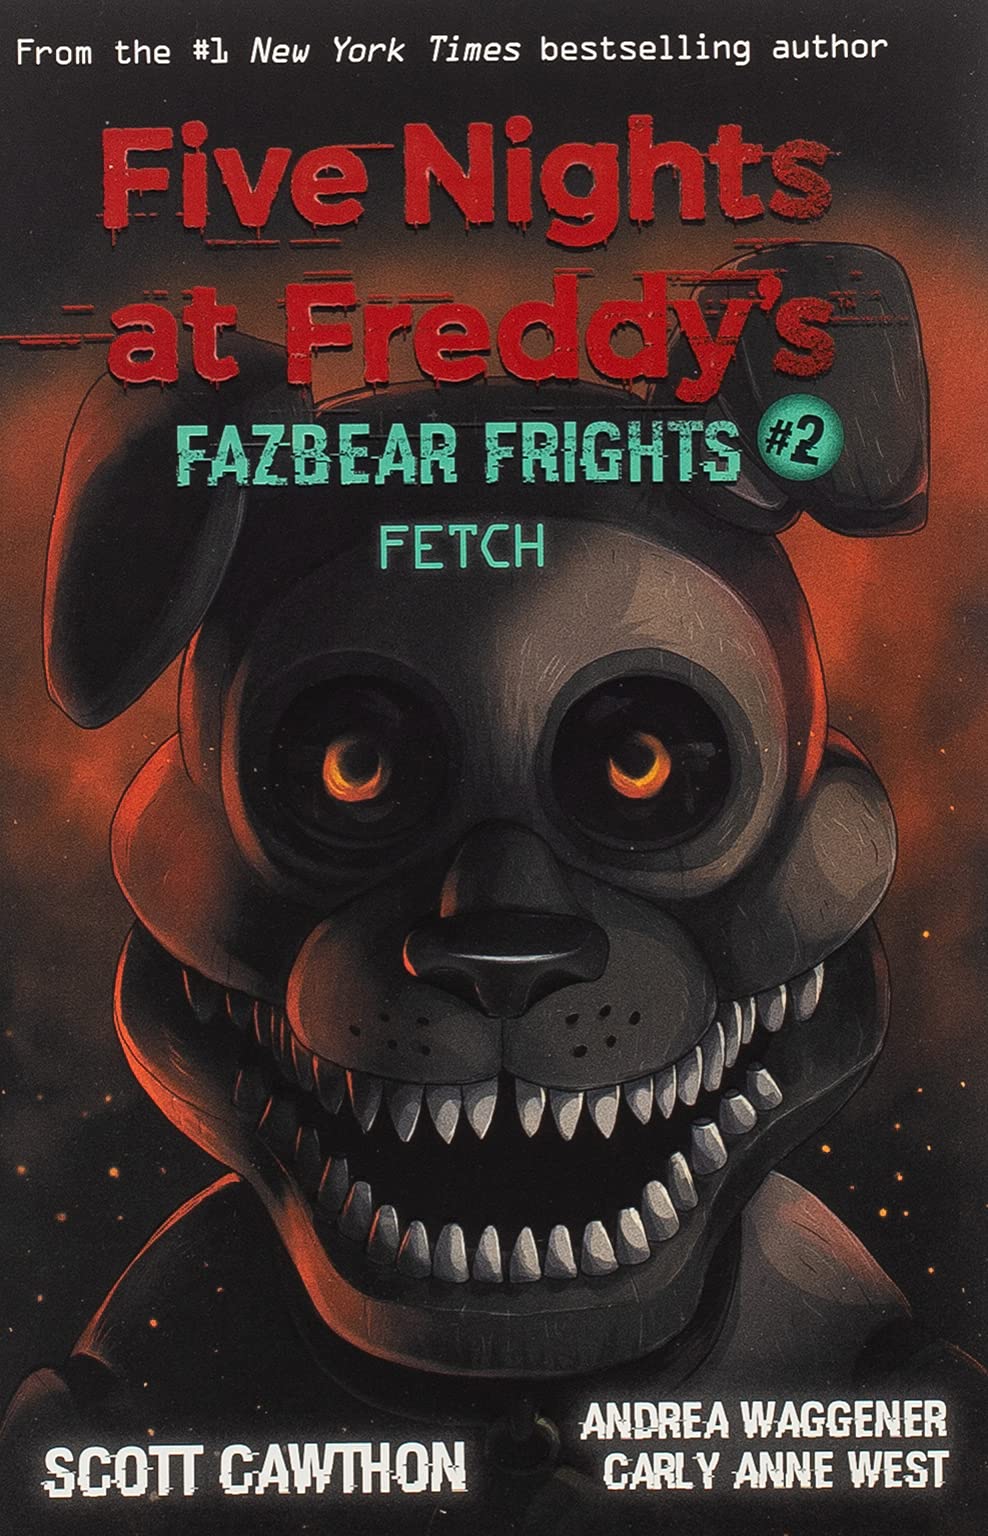 Five Nights at Freddy's #2 : Fazbear Frights - Fetch